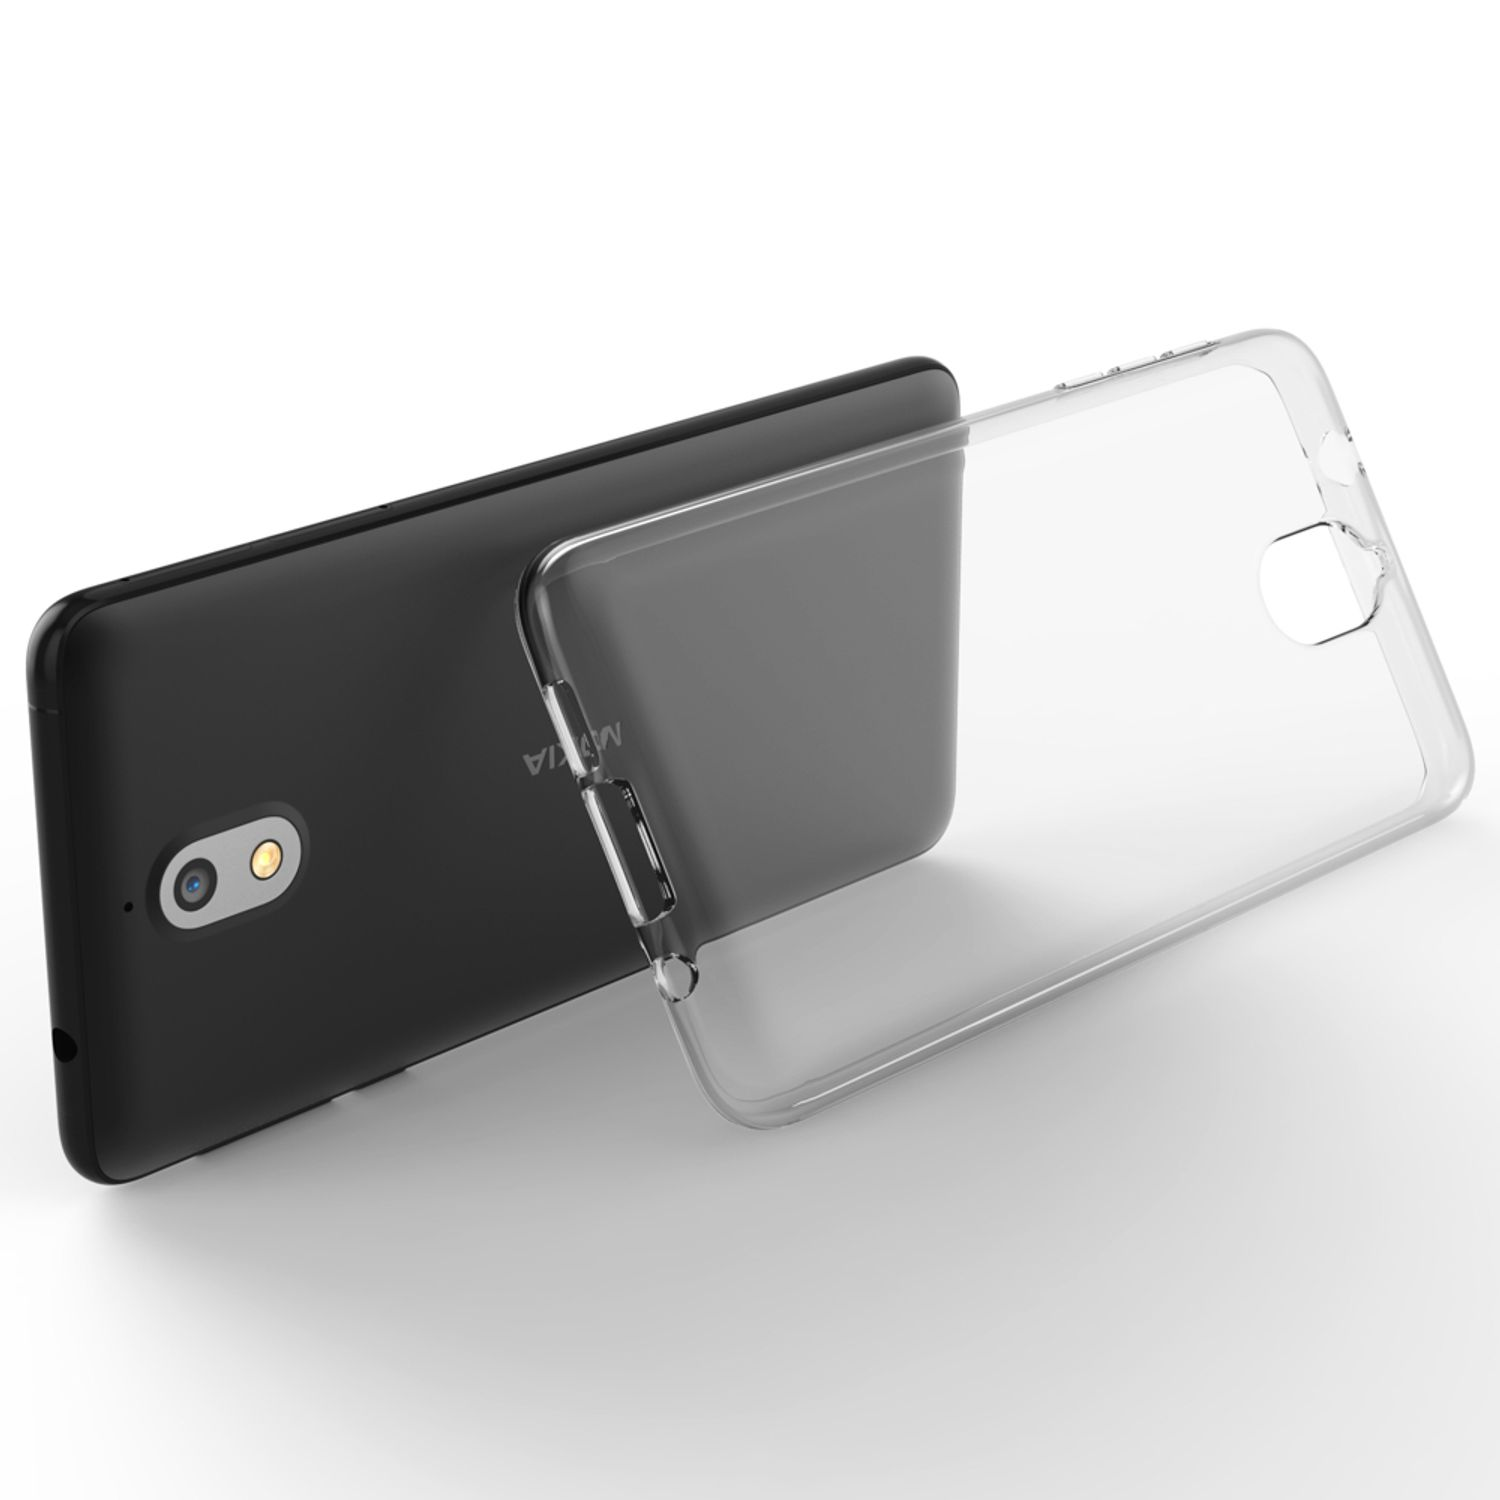 3.1 Hülle, Nokia, Backcover, Transparente Klar Silikon (2018), Transparent NALIA